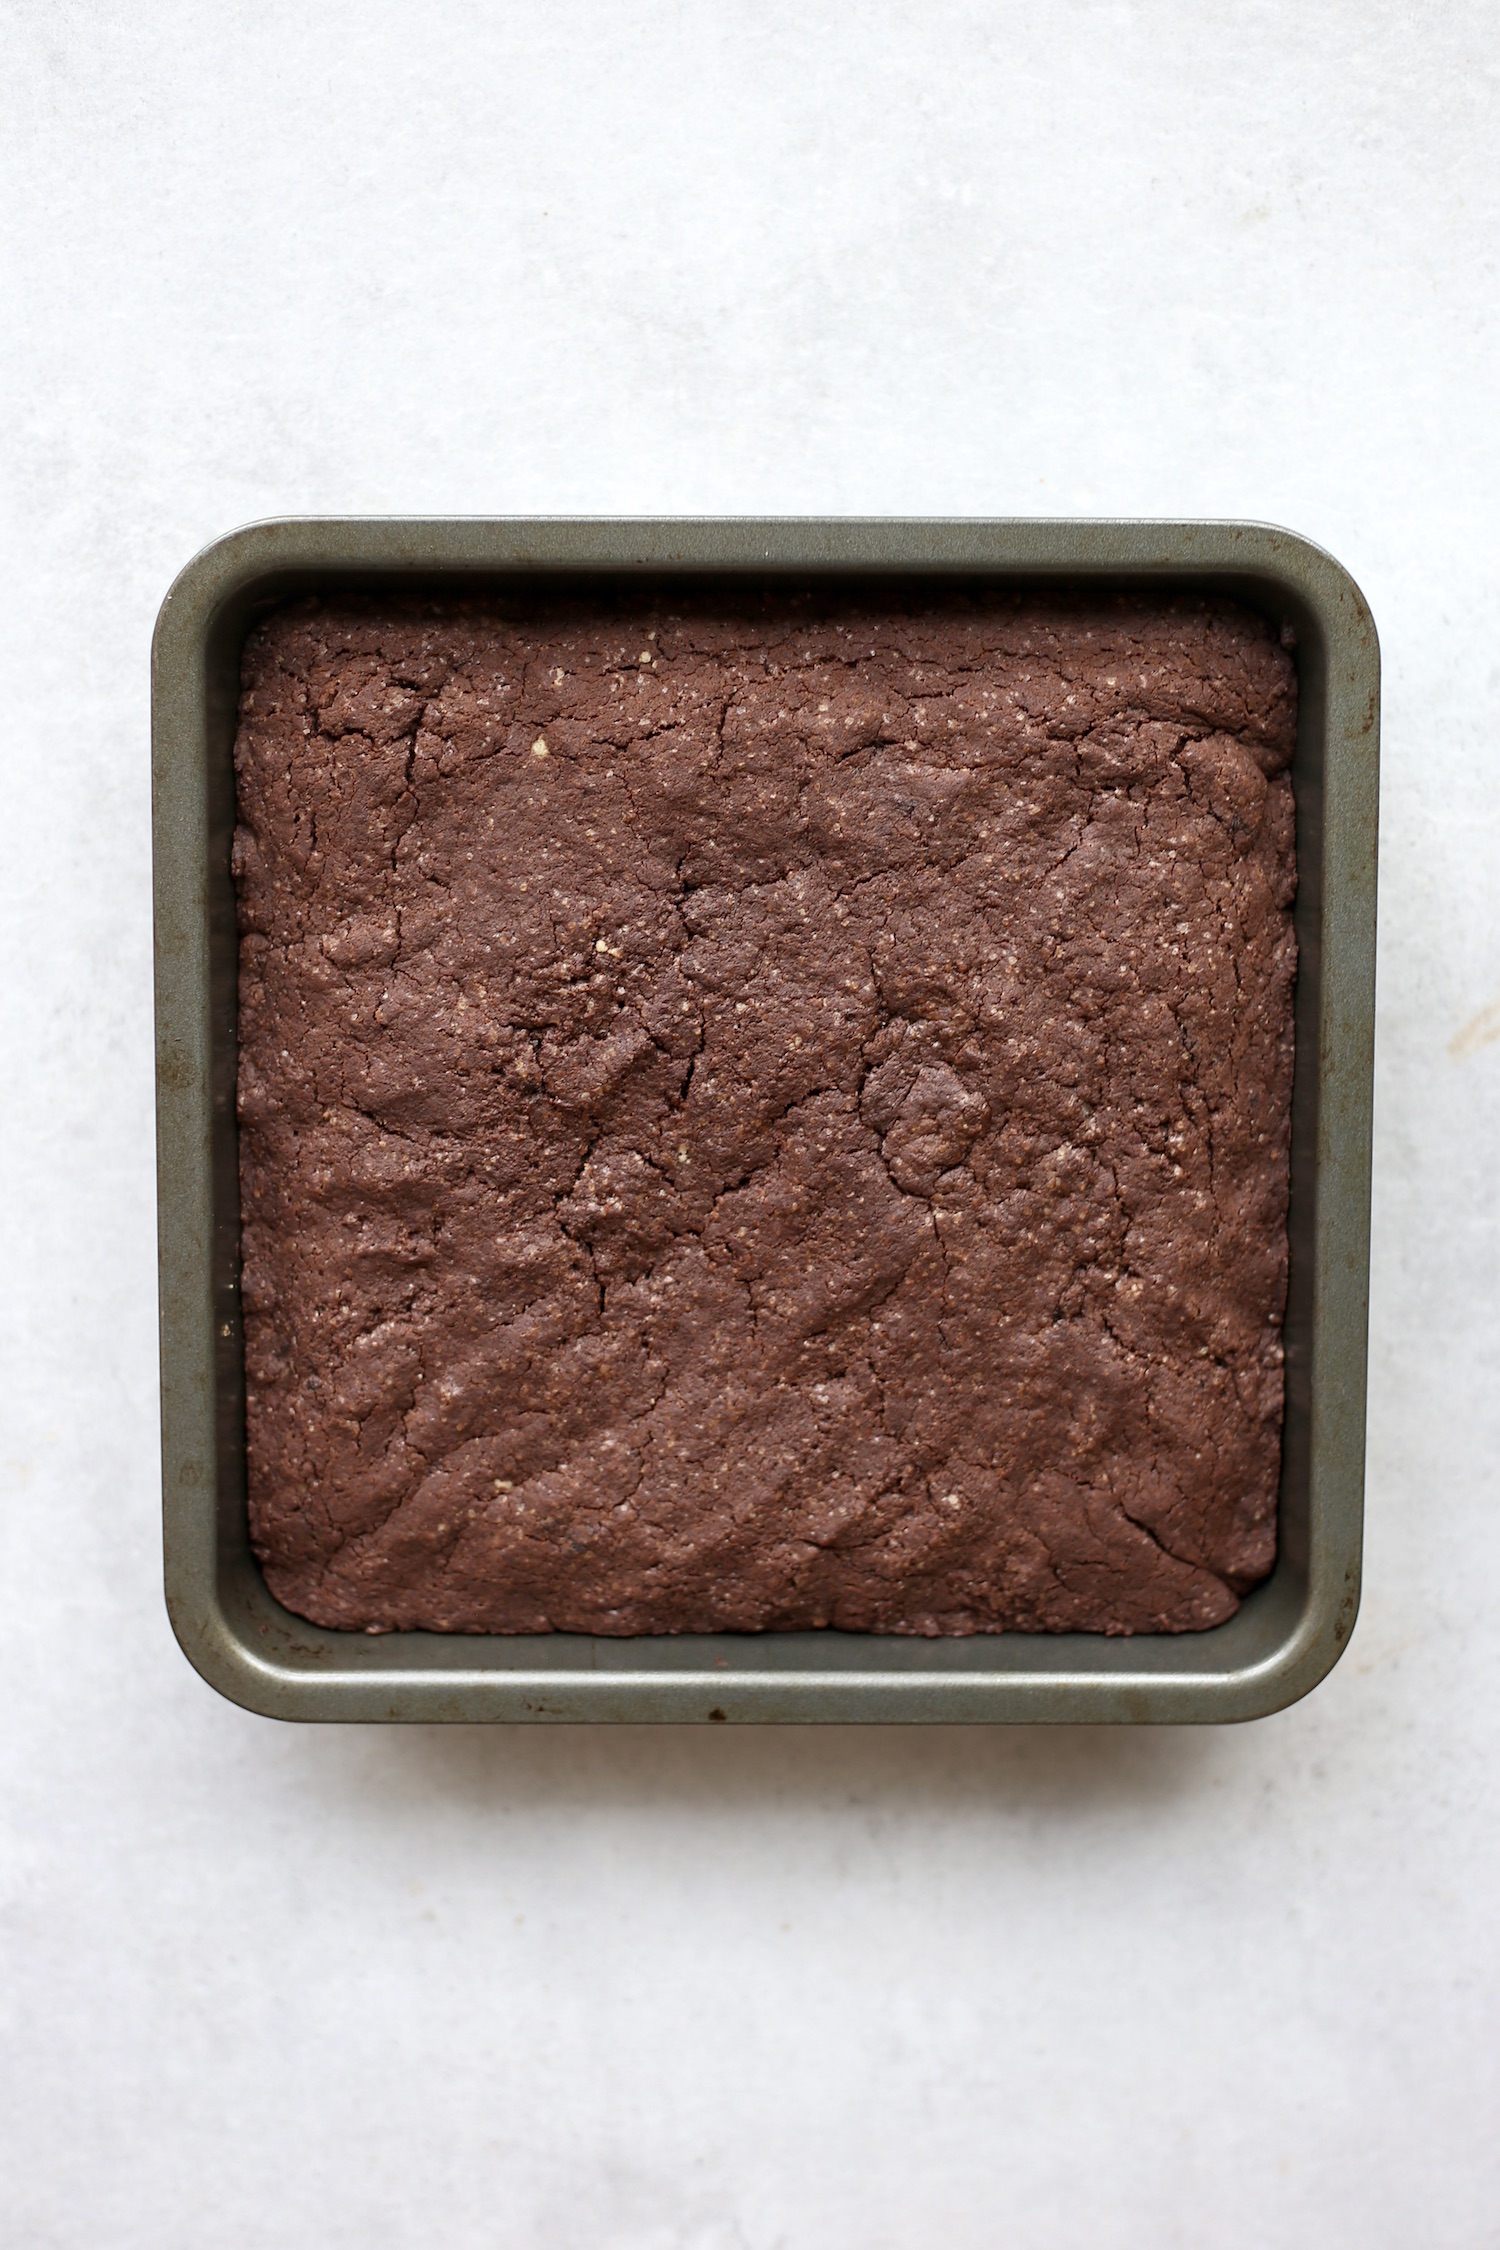 An overhead shot of vegan brownies in an 8x8 inch metal baking dish. 